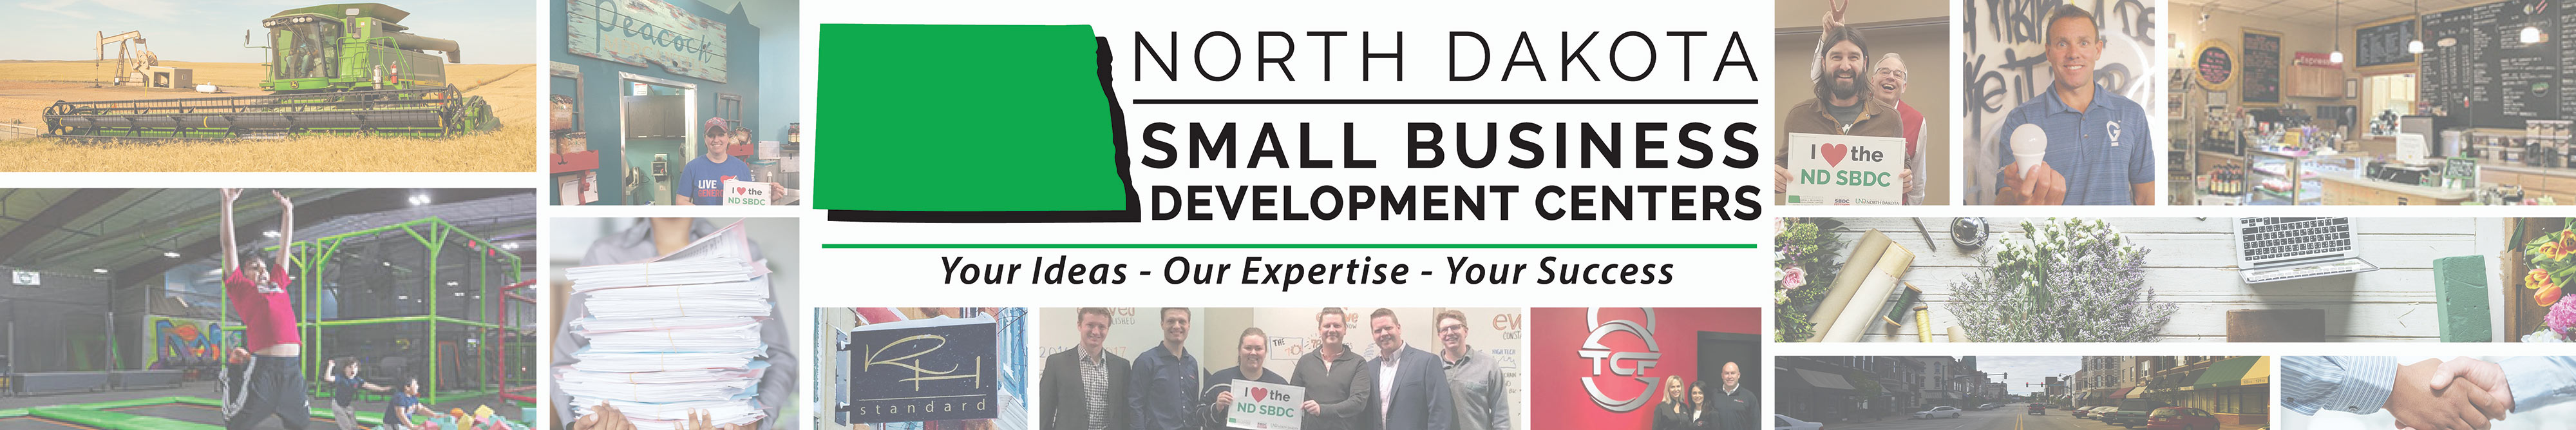 North Dakota Small Business Development Centers